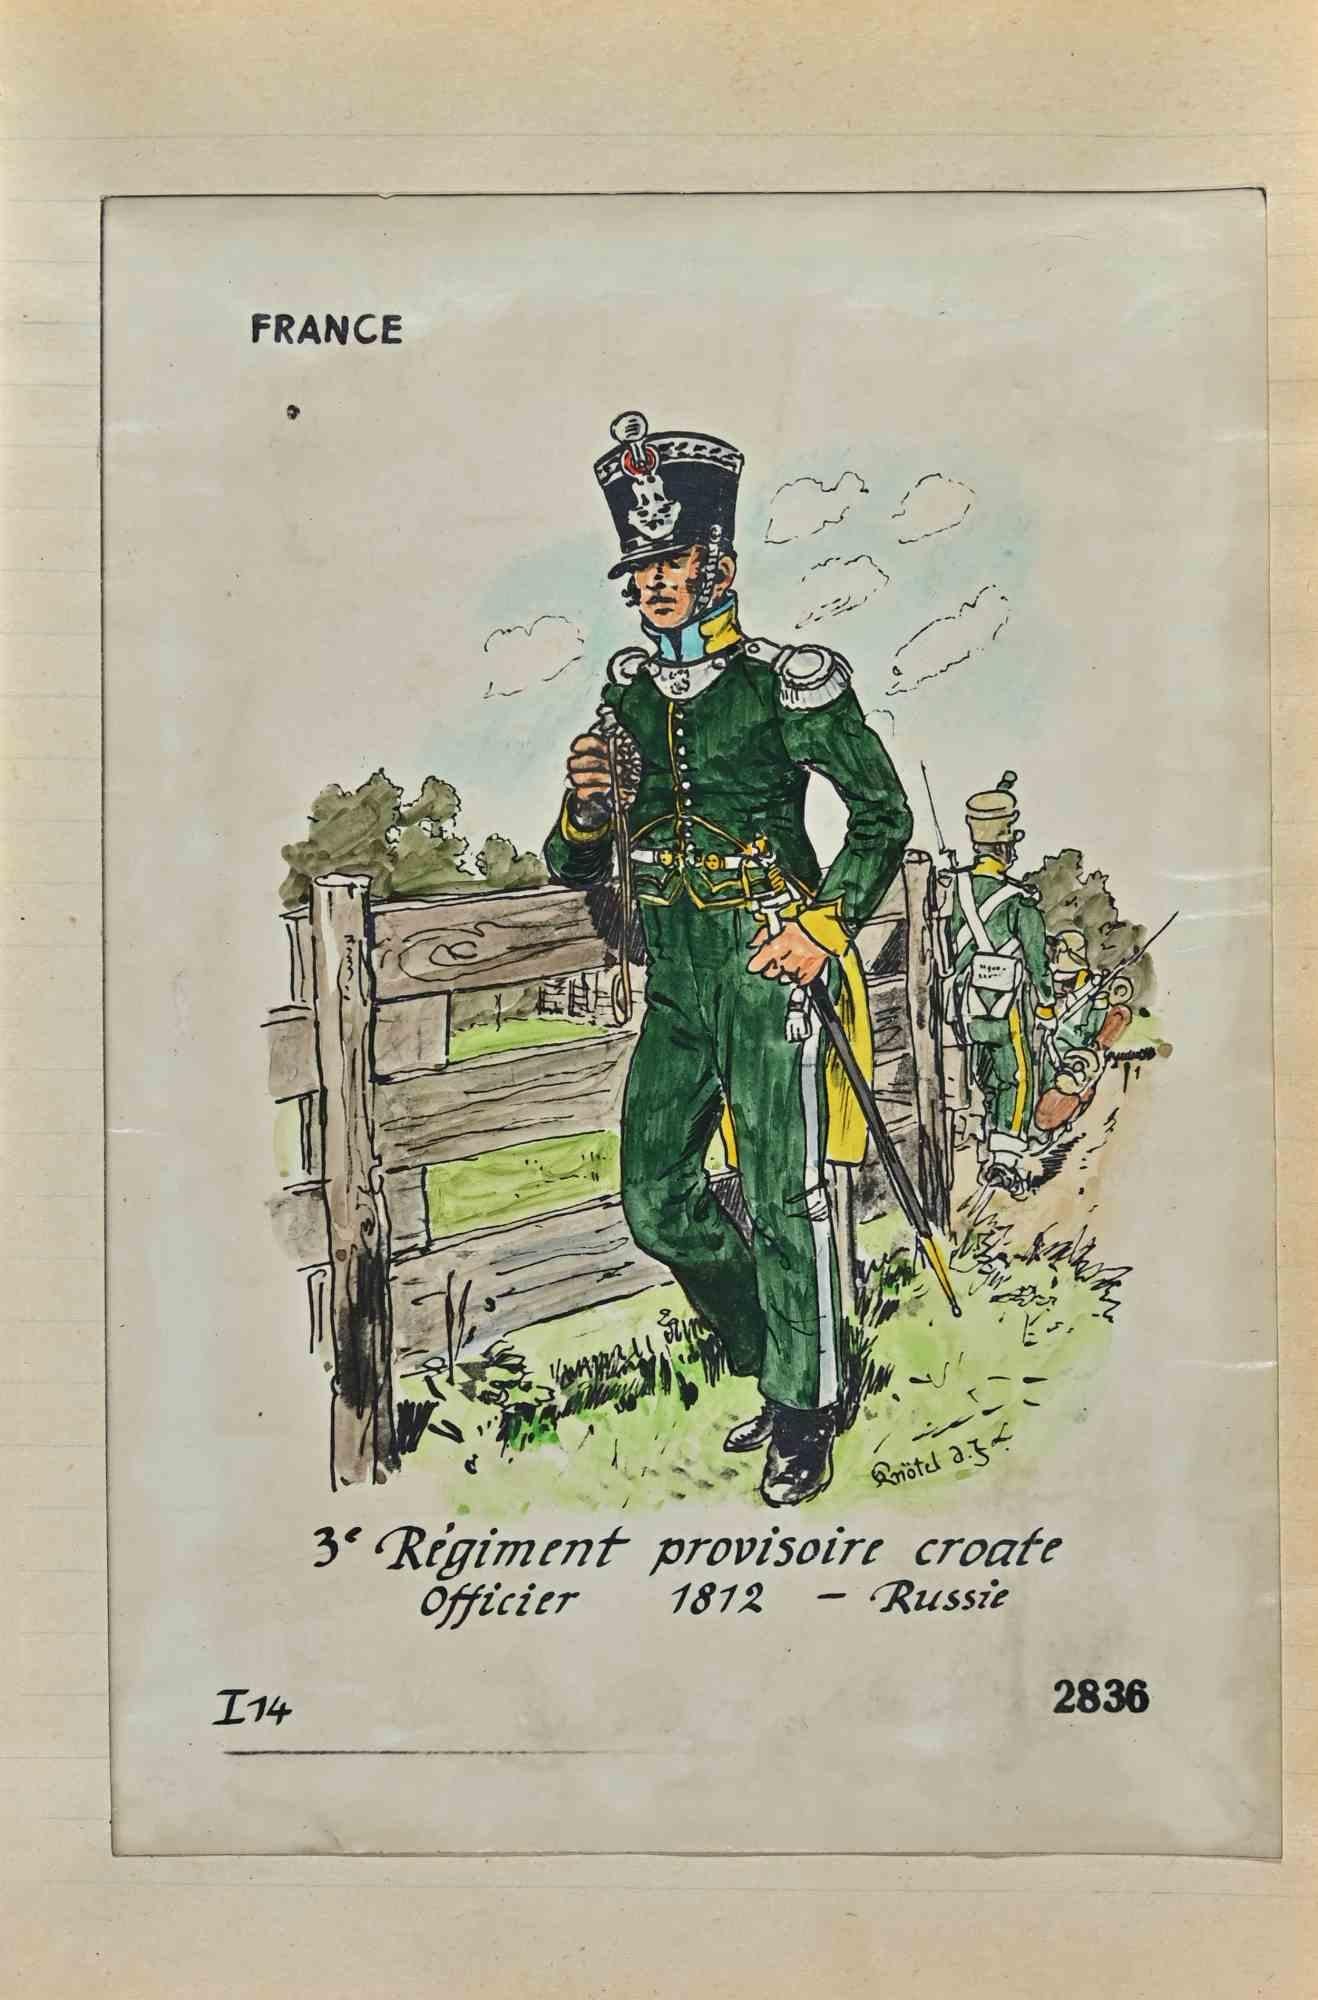 1er regiment d'infanterie provisories croate